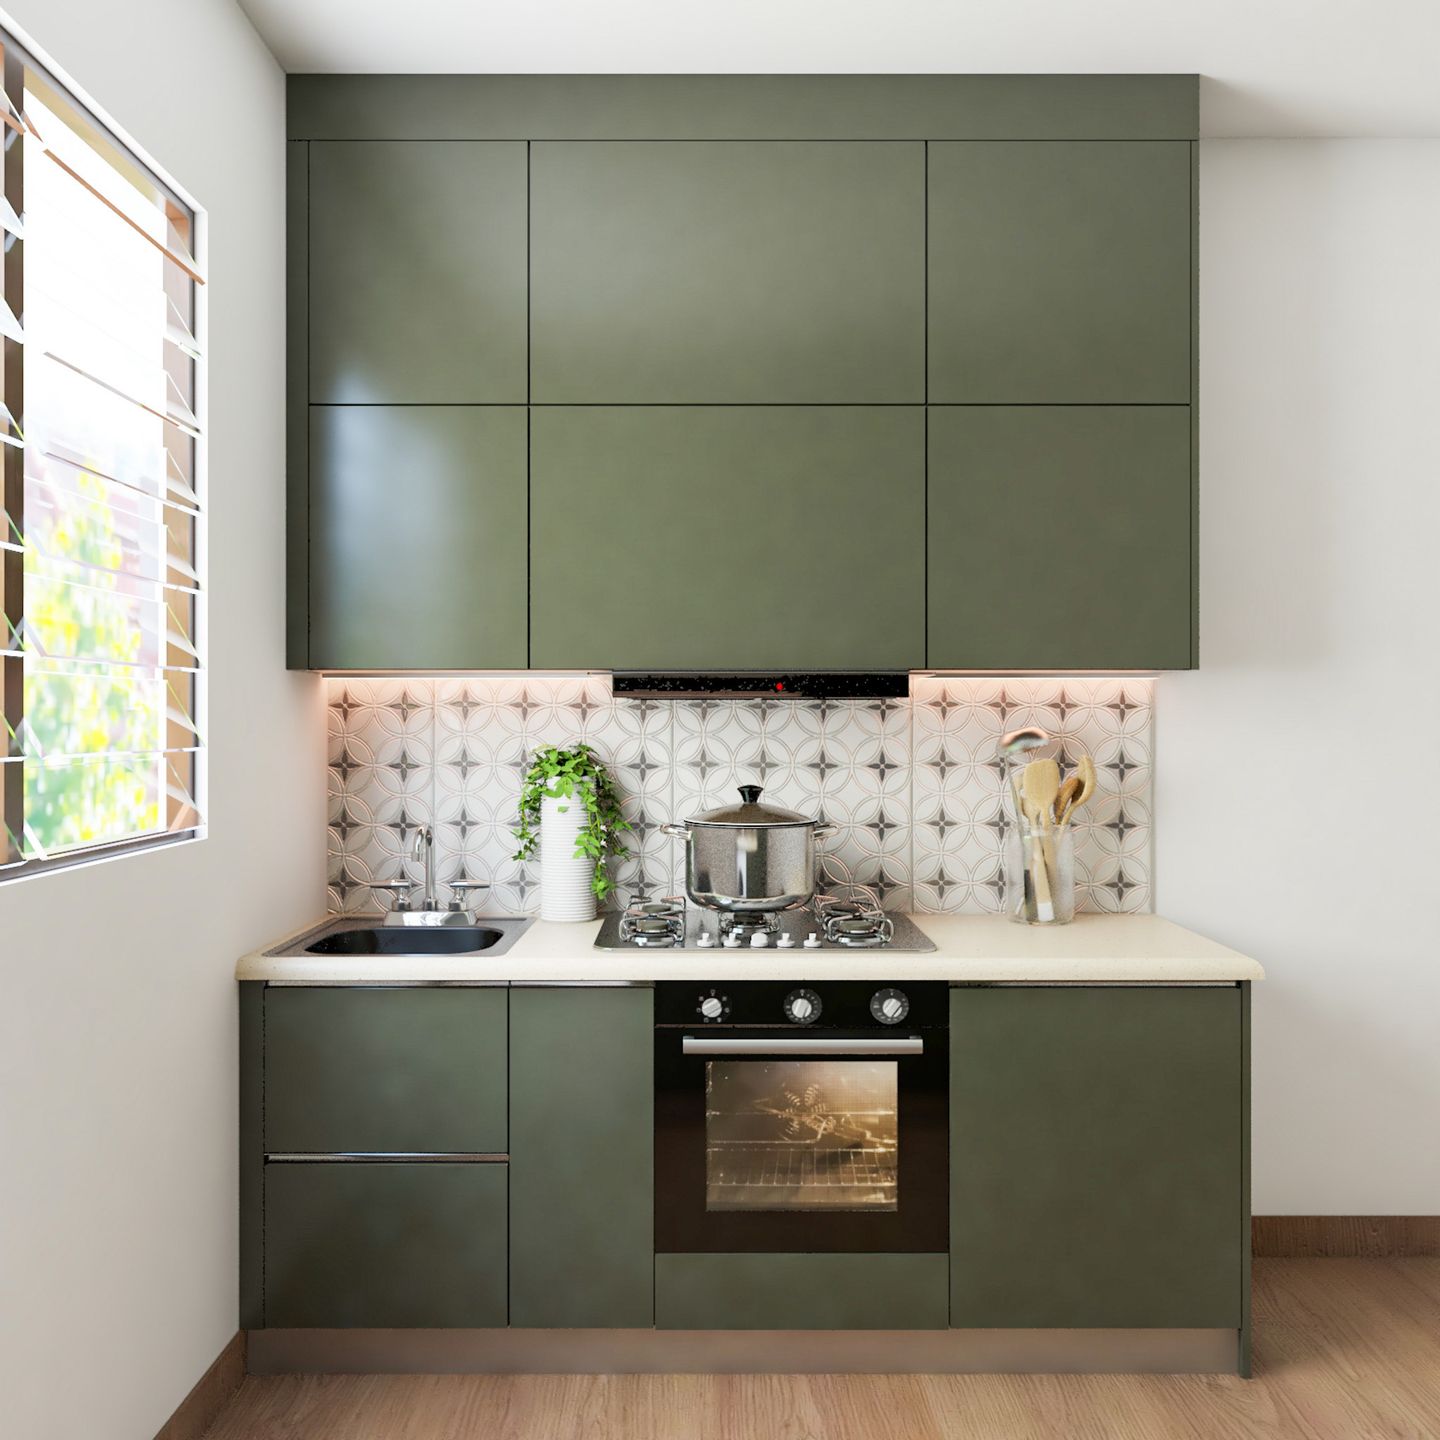 Parallel Kitchen Design With Patterned Dado Tiles - Livspace